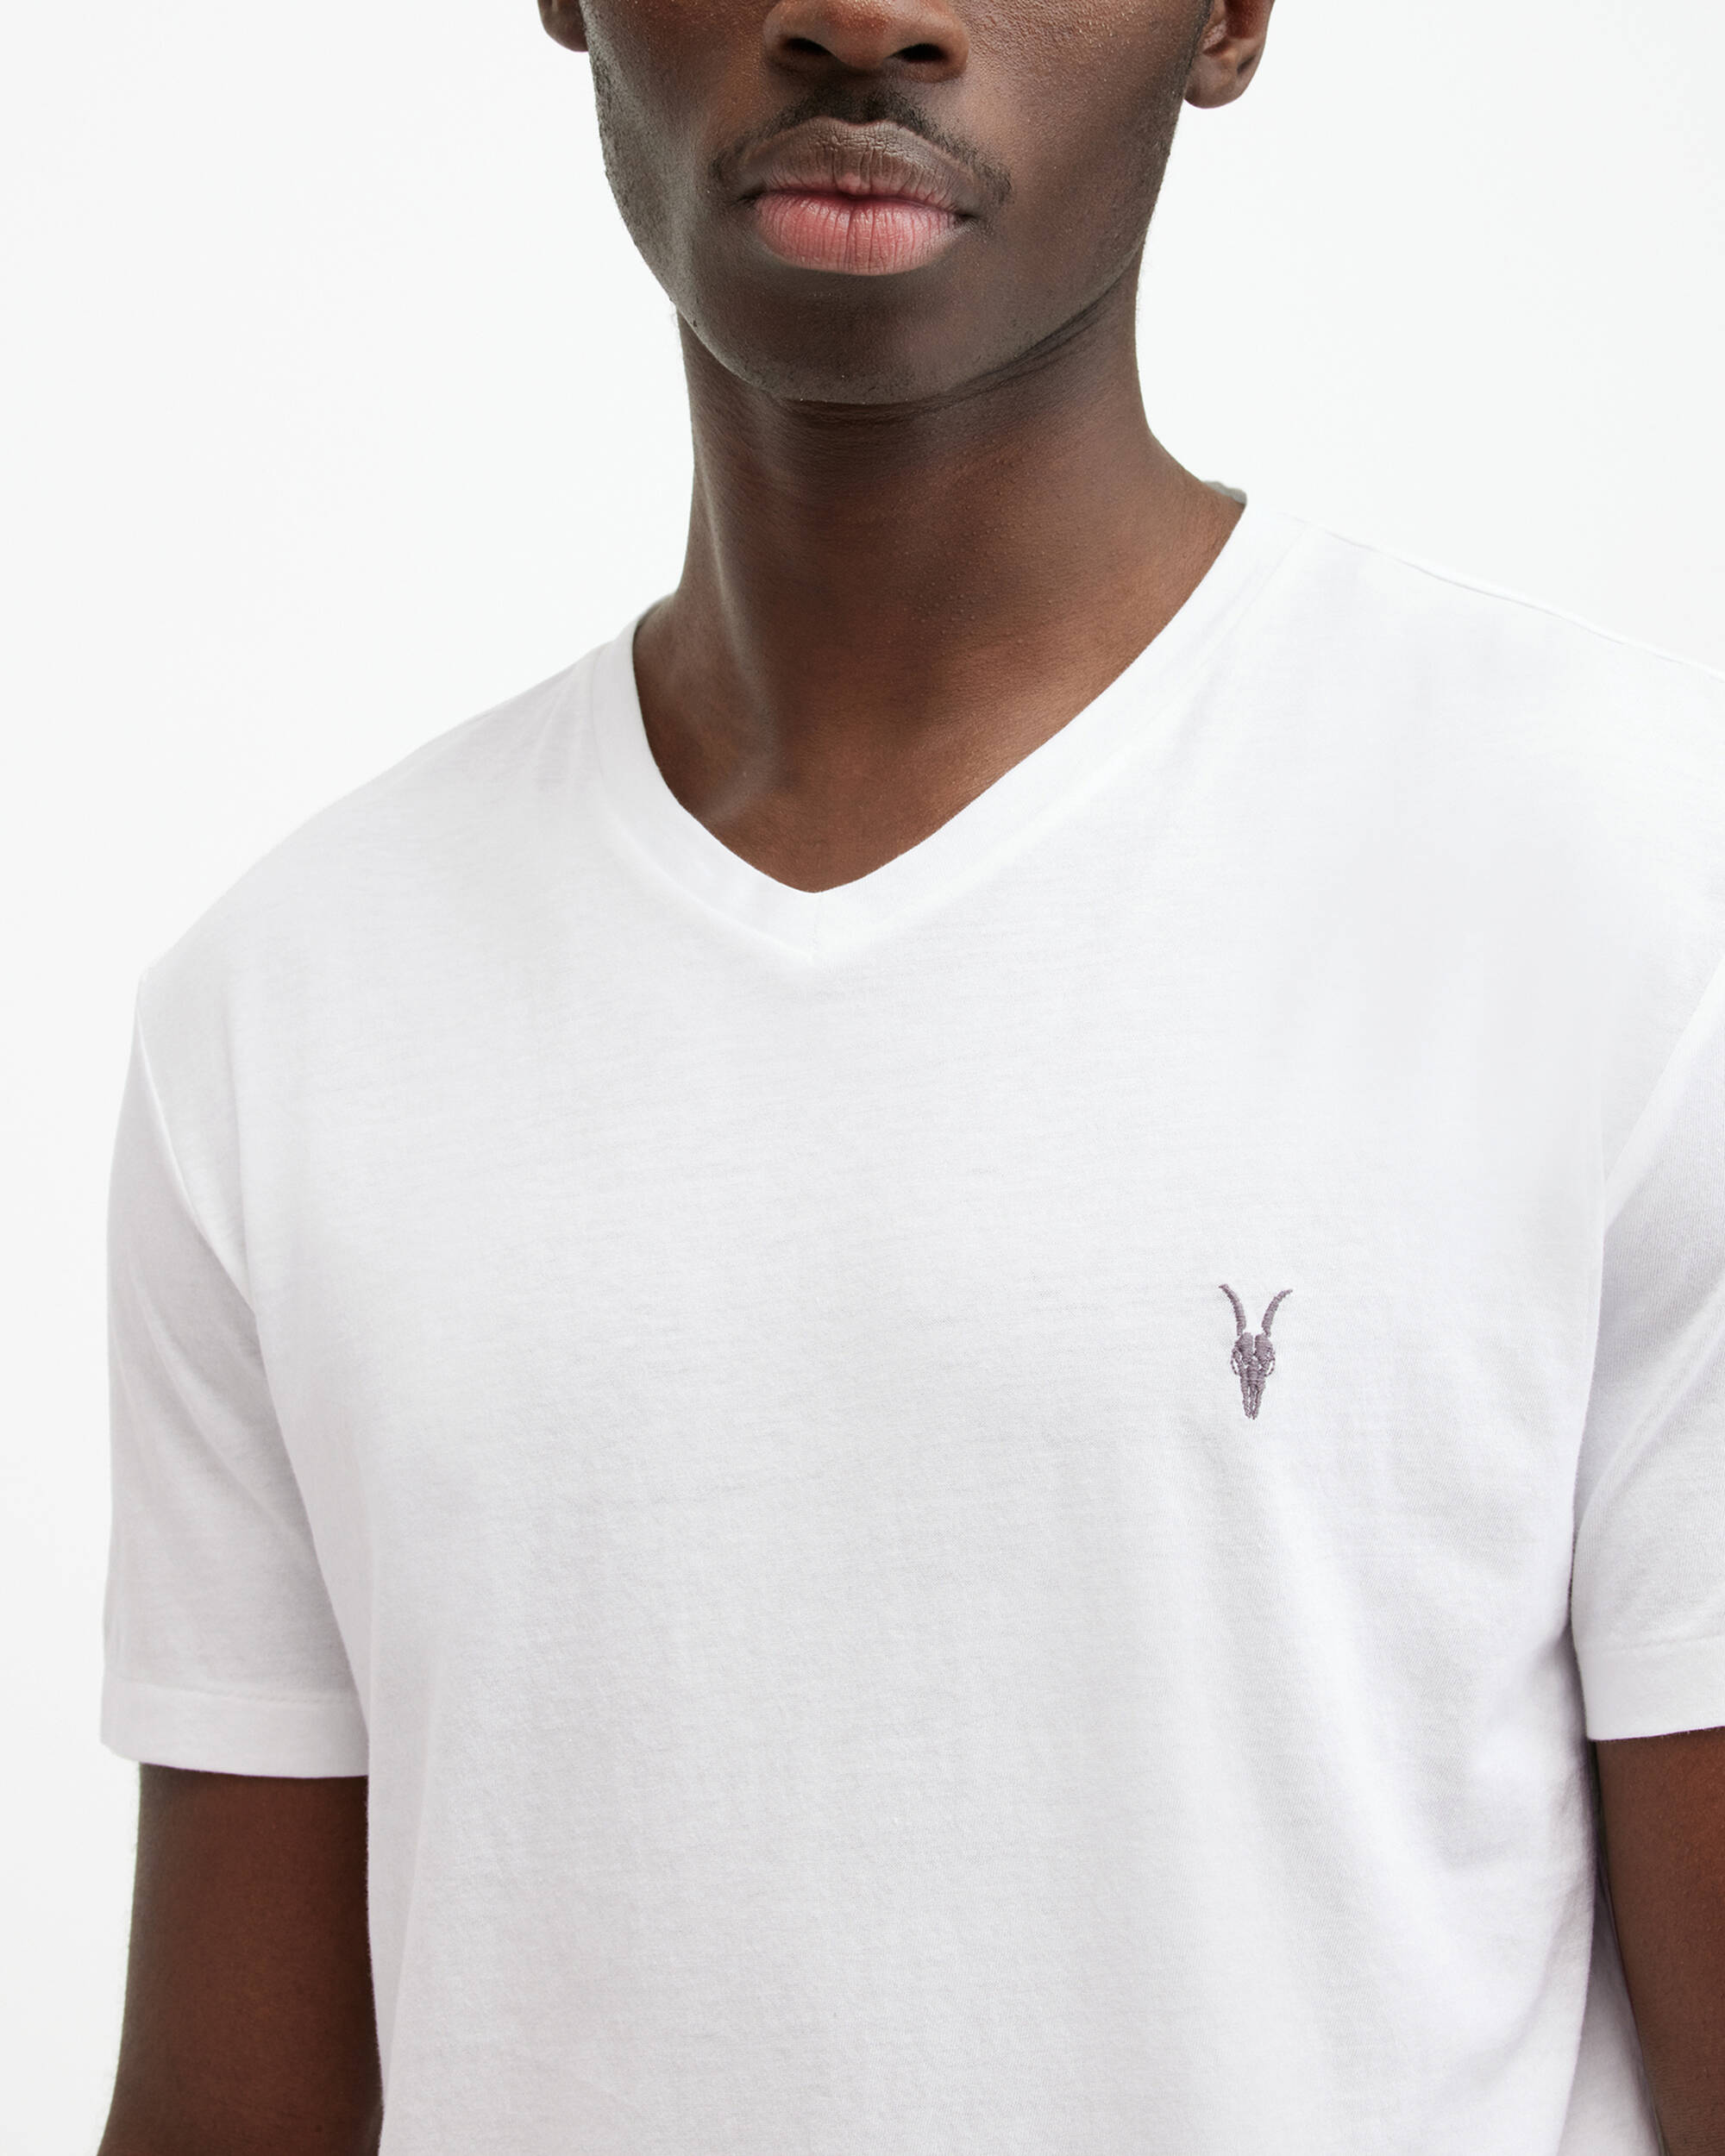 Tonic V-neck T-Shirt  large image number 2